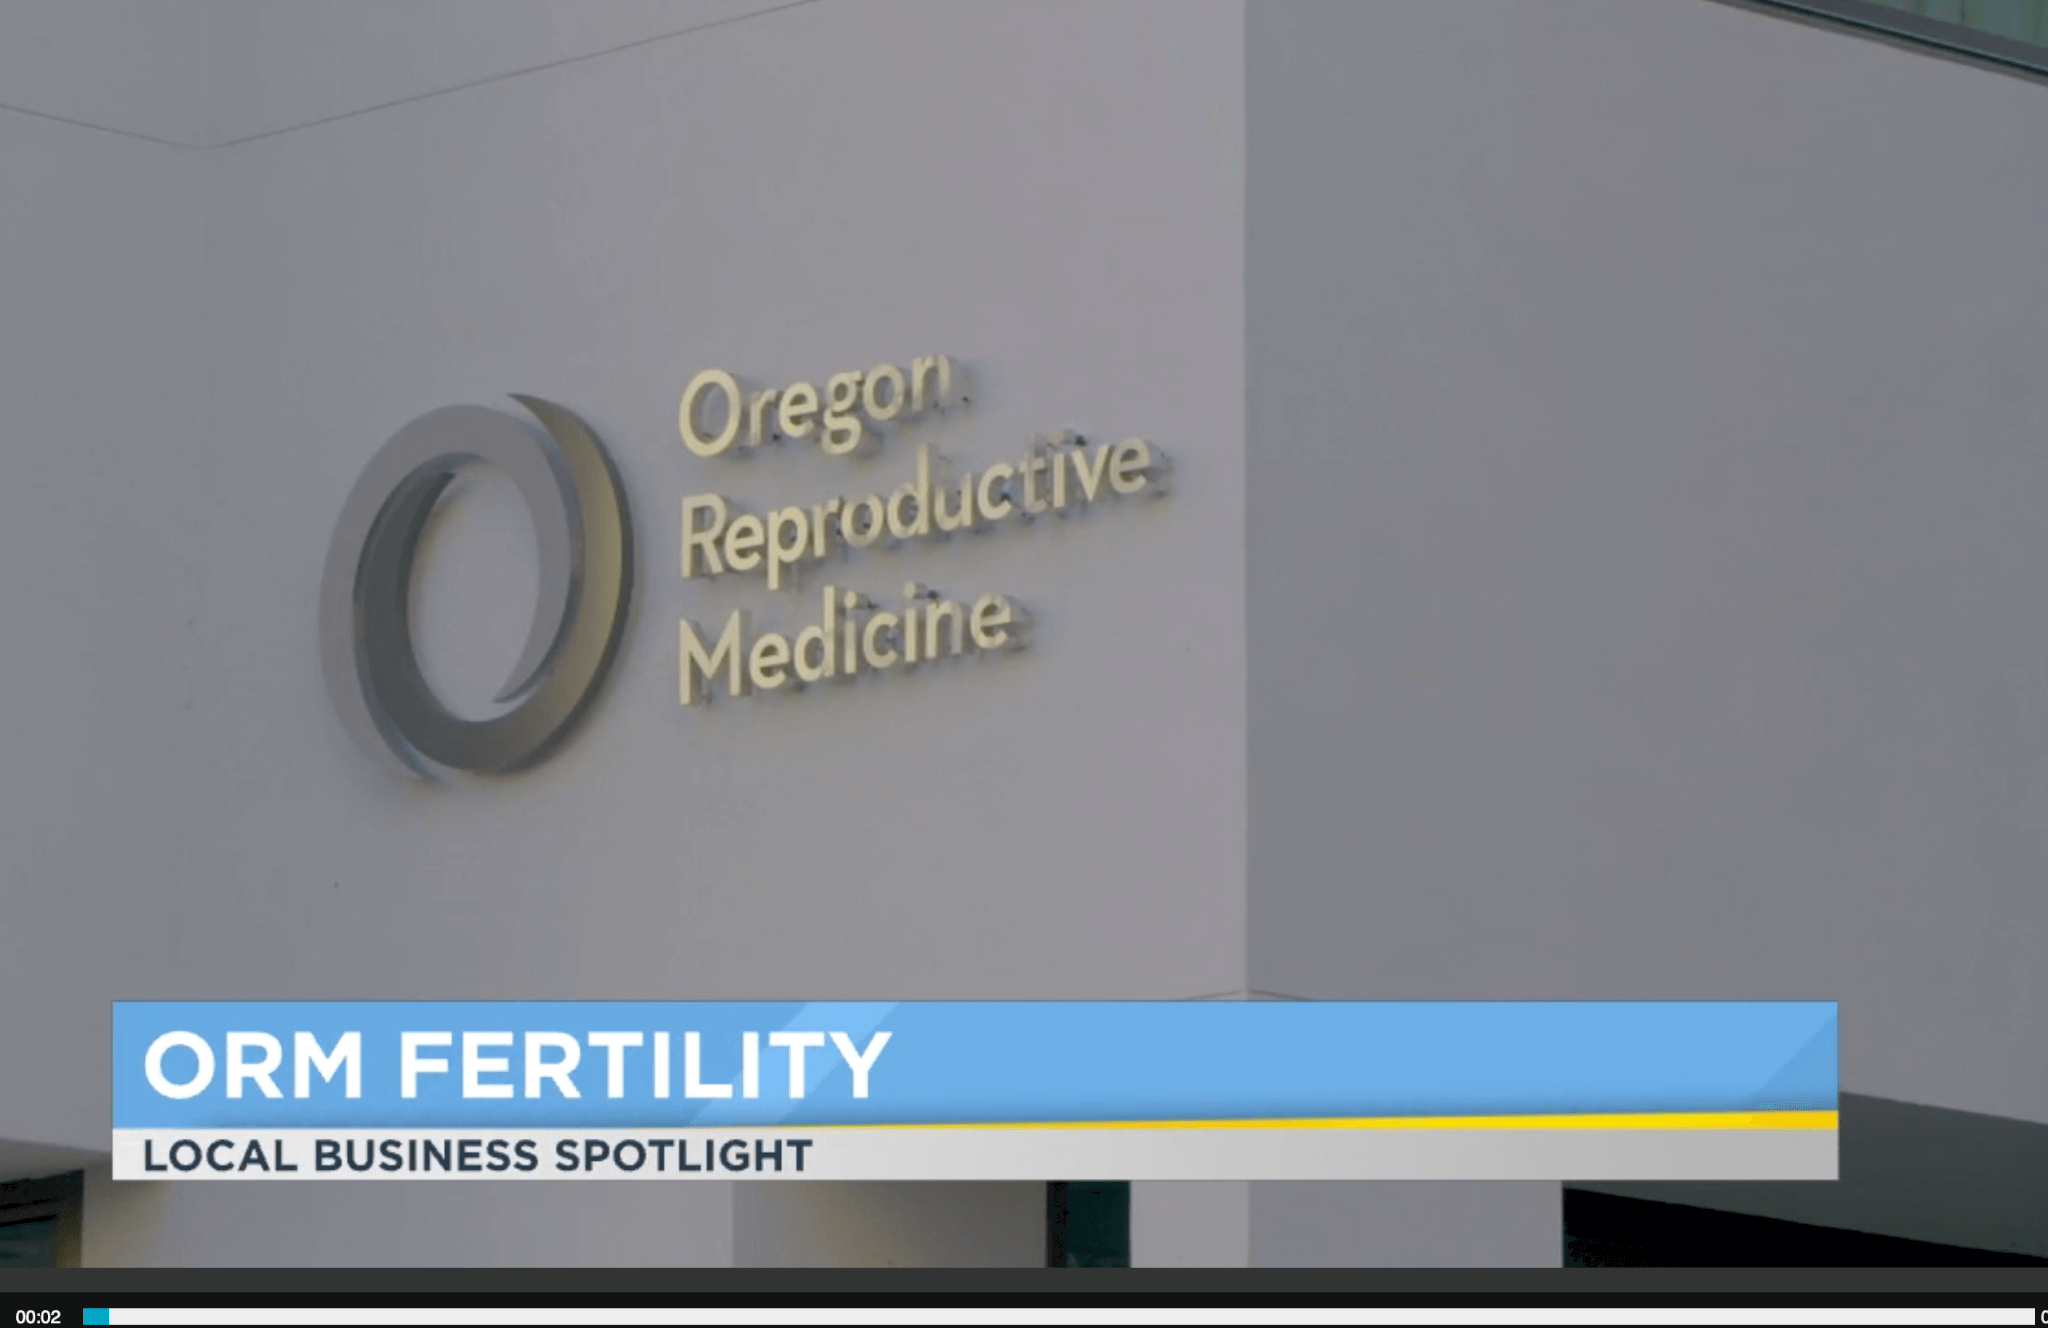 Local Business Spotlight: ORM Fertility